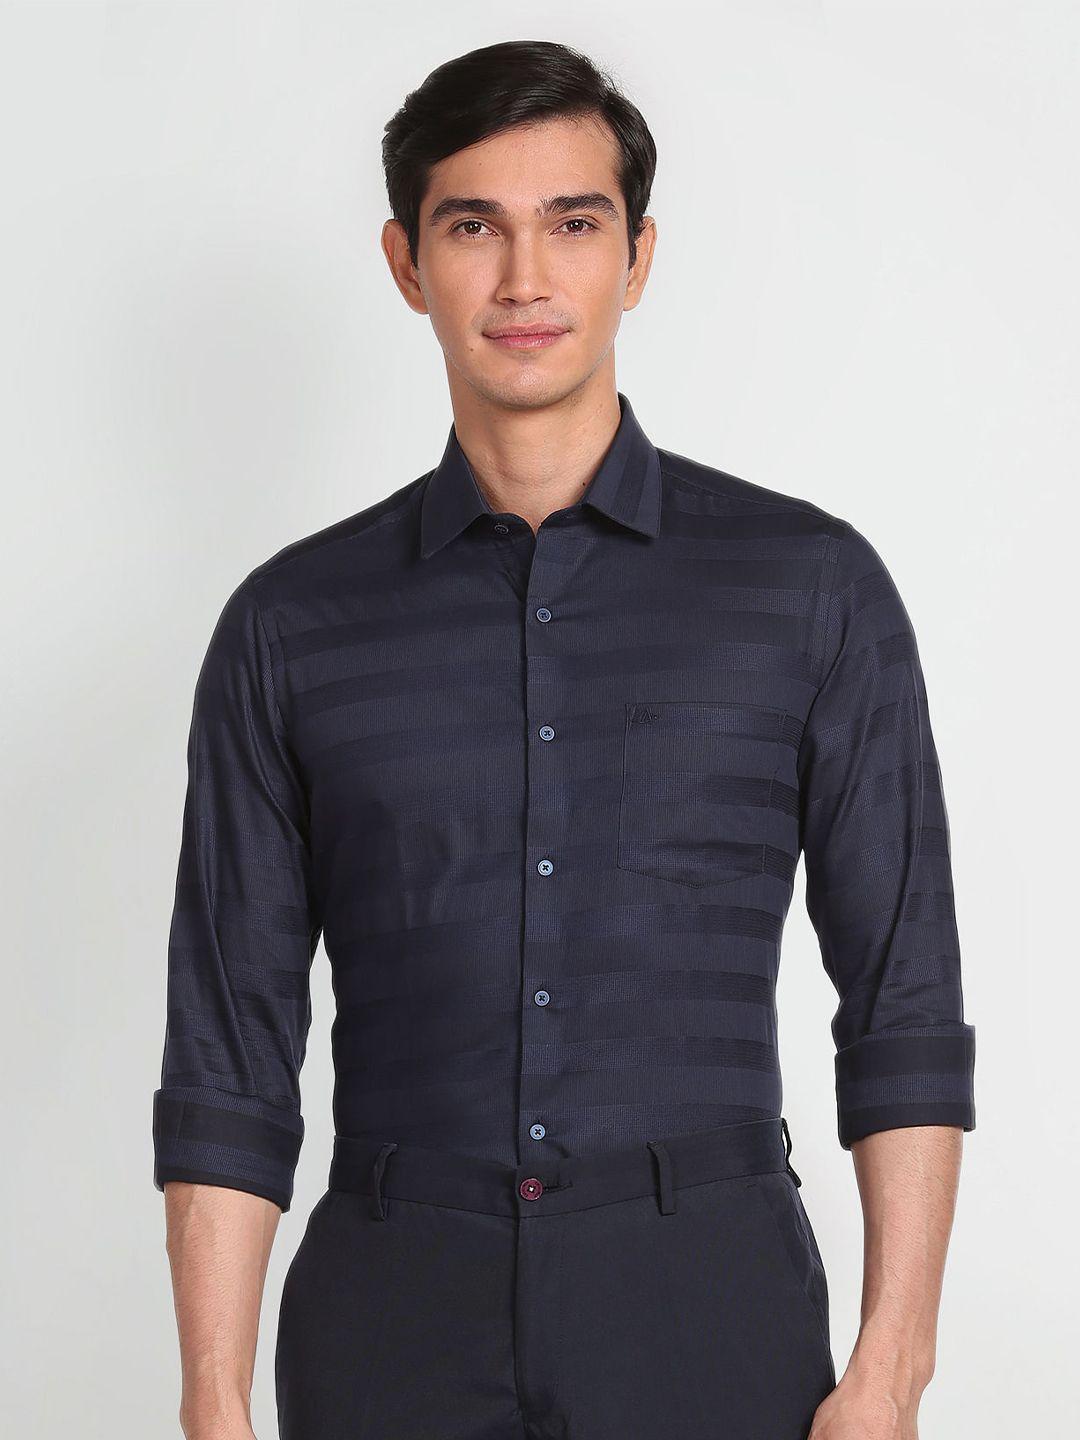 arrow slim fit horizontal striped pure cotton formal shirt